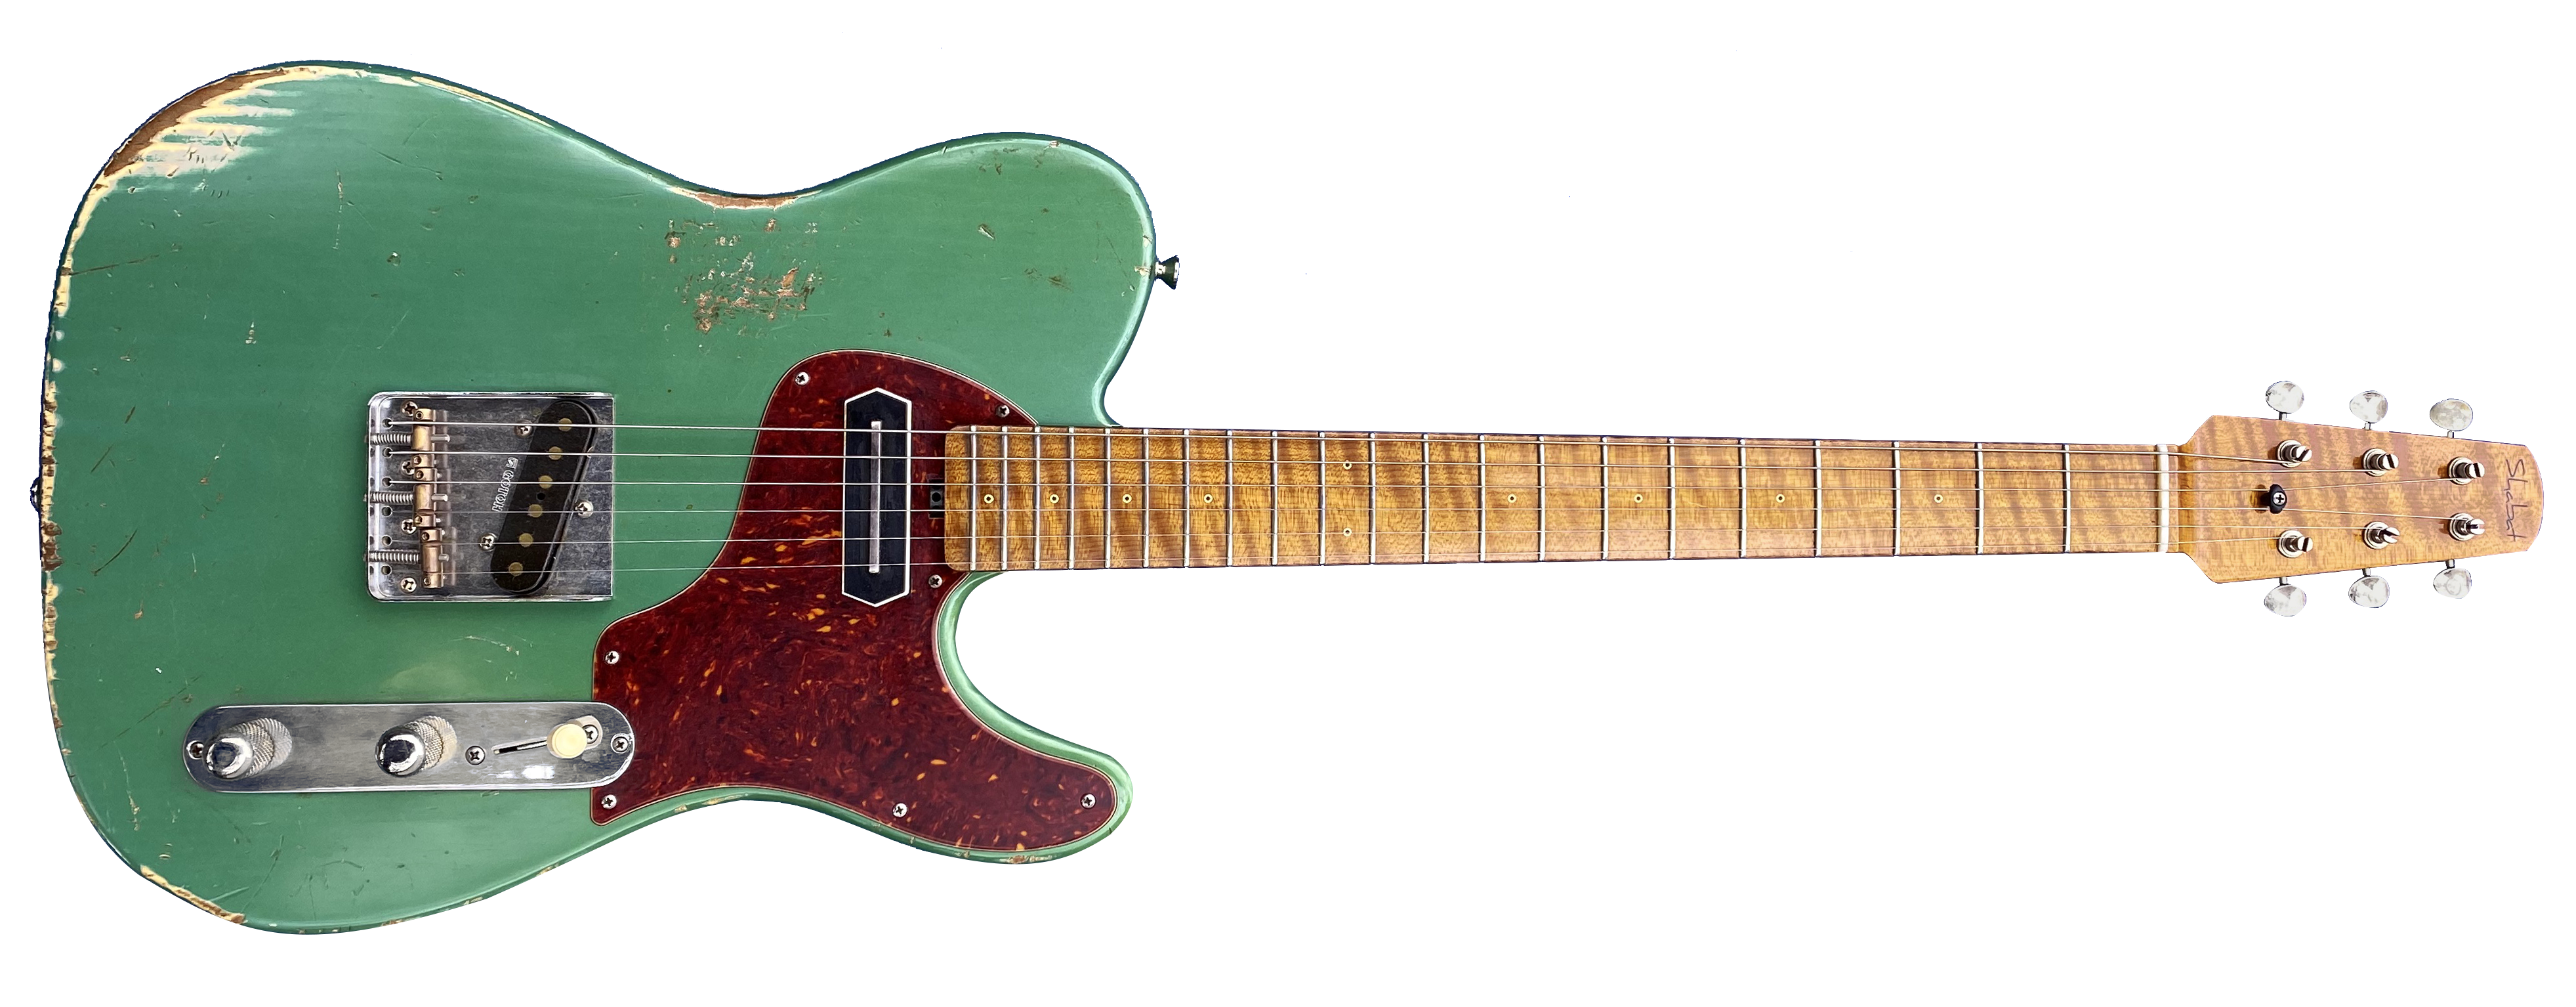 Shabat Lion GB Custom Electric Guitar